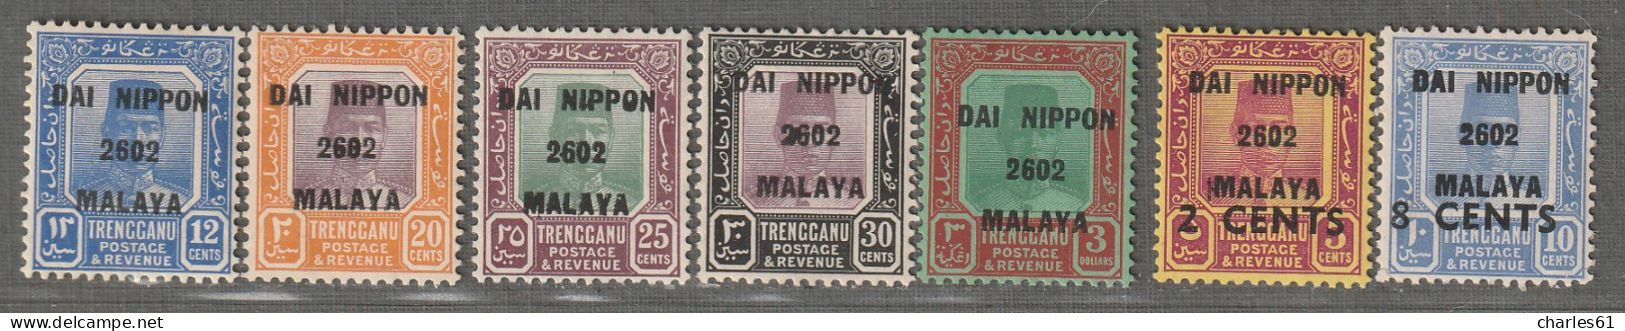 TRENGGANU - OCCUPATION JAPONAISE - N°29/35 * (1942) "Dai Nippon 2602 Malaya" - Japanese Occupation